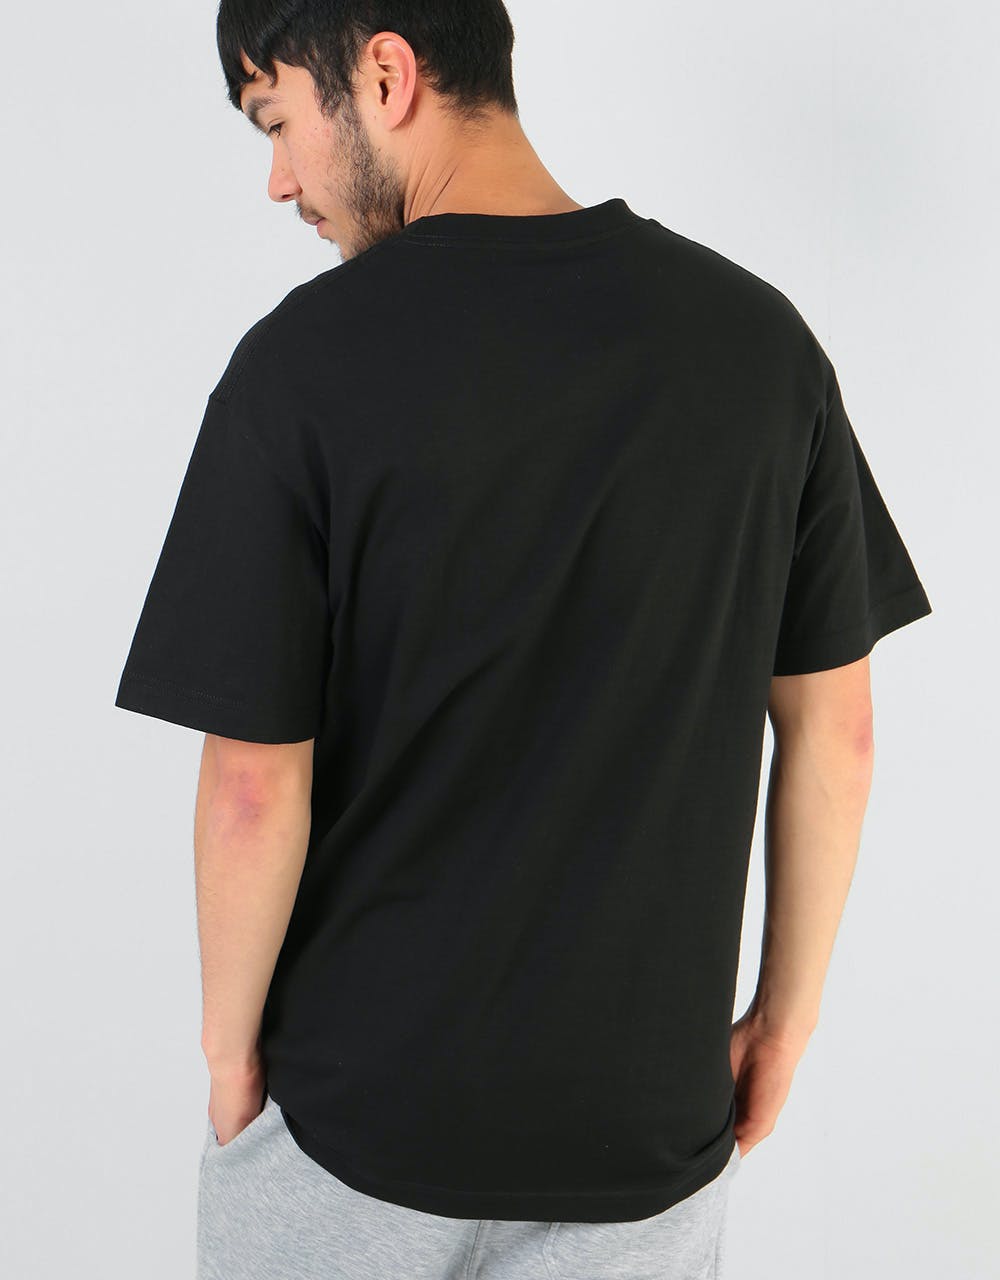 LRG Logo Plus T-Shirt - Black